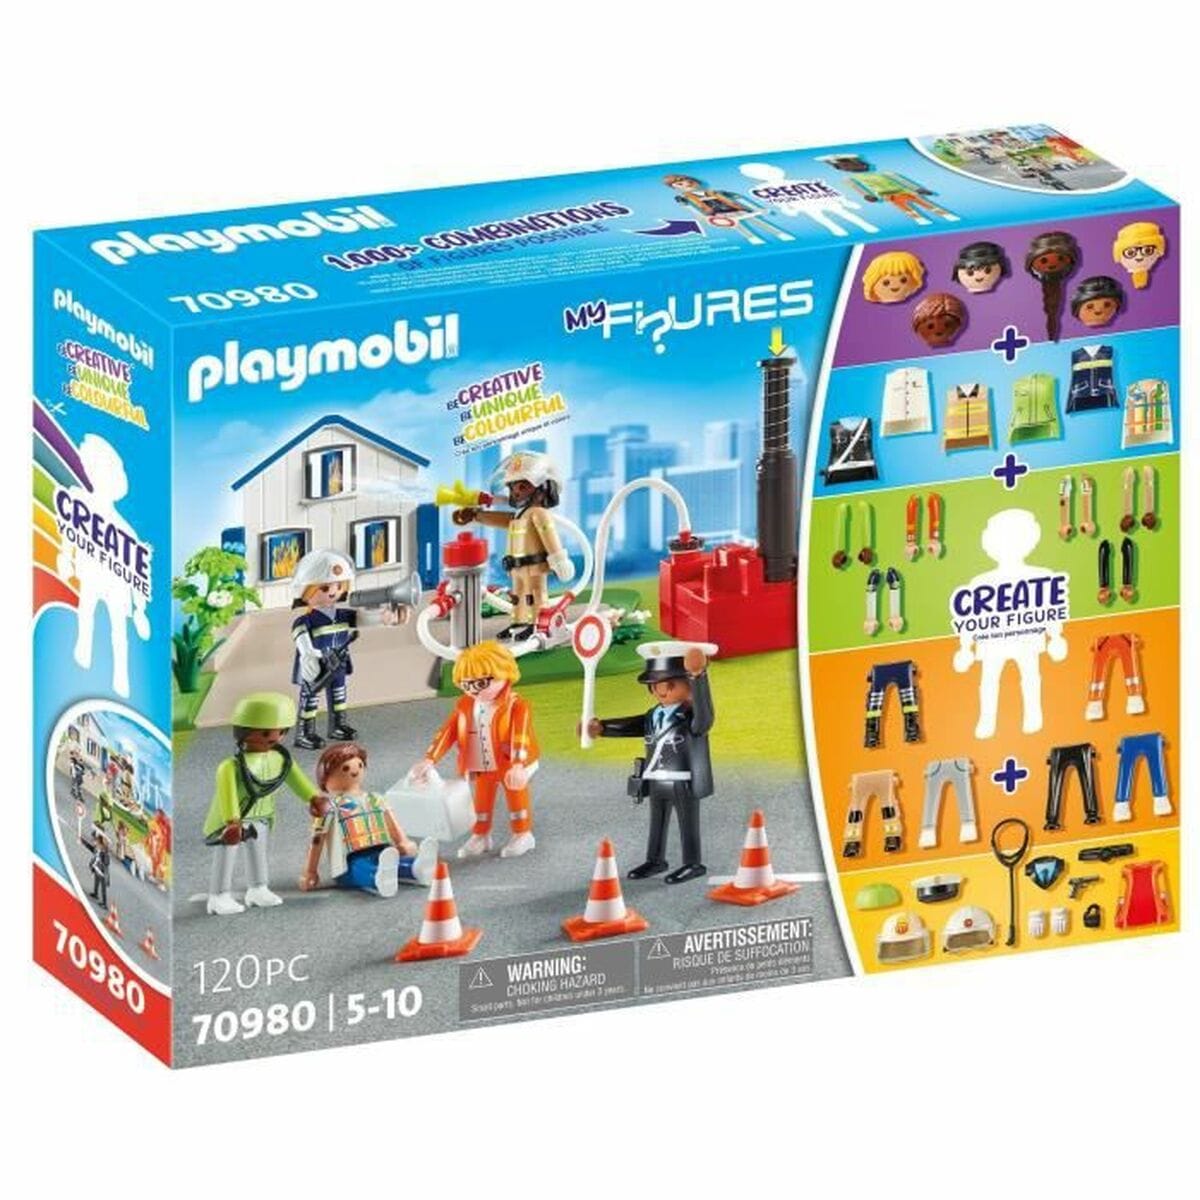 Playmobil Spielzeug | Kostüme > Spielzeug und Spiele > Weiteres spielzeug Playset Playmobil 70980 My Figures Rescue Mission